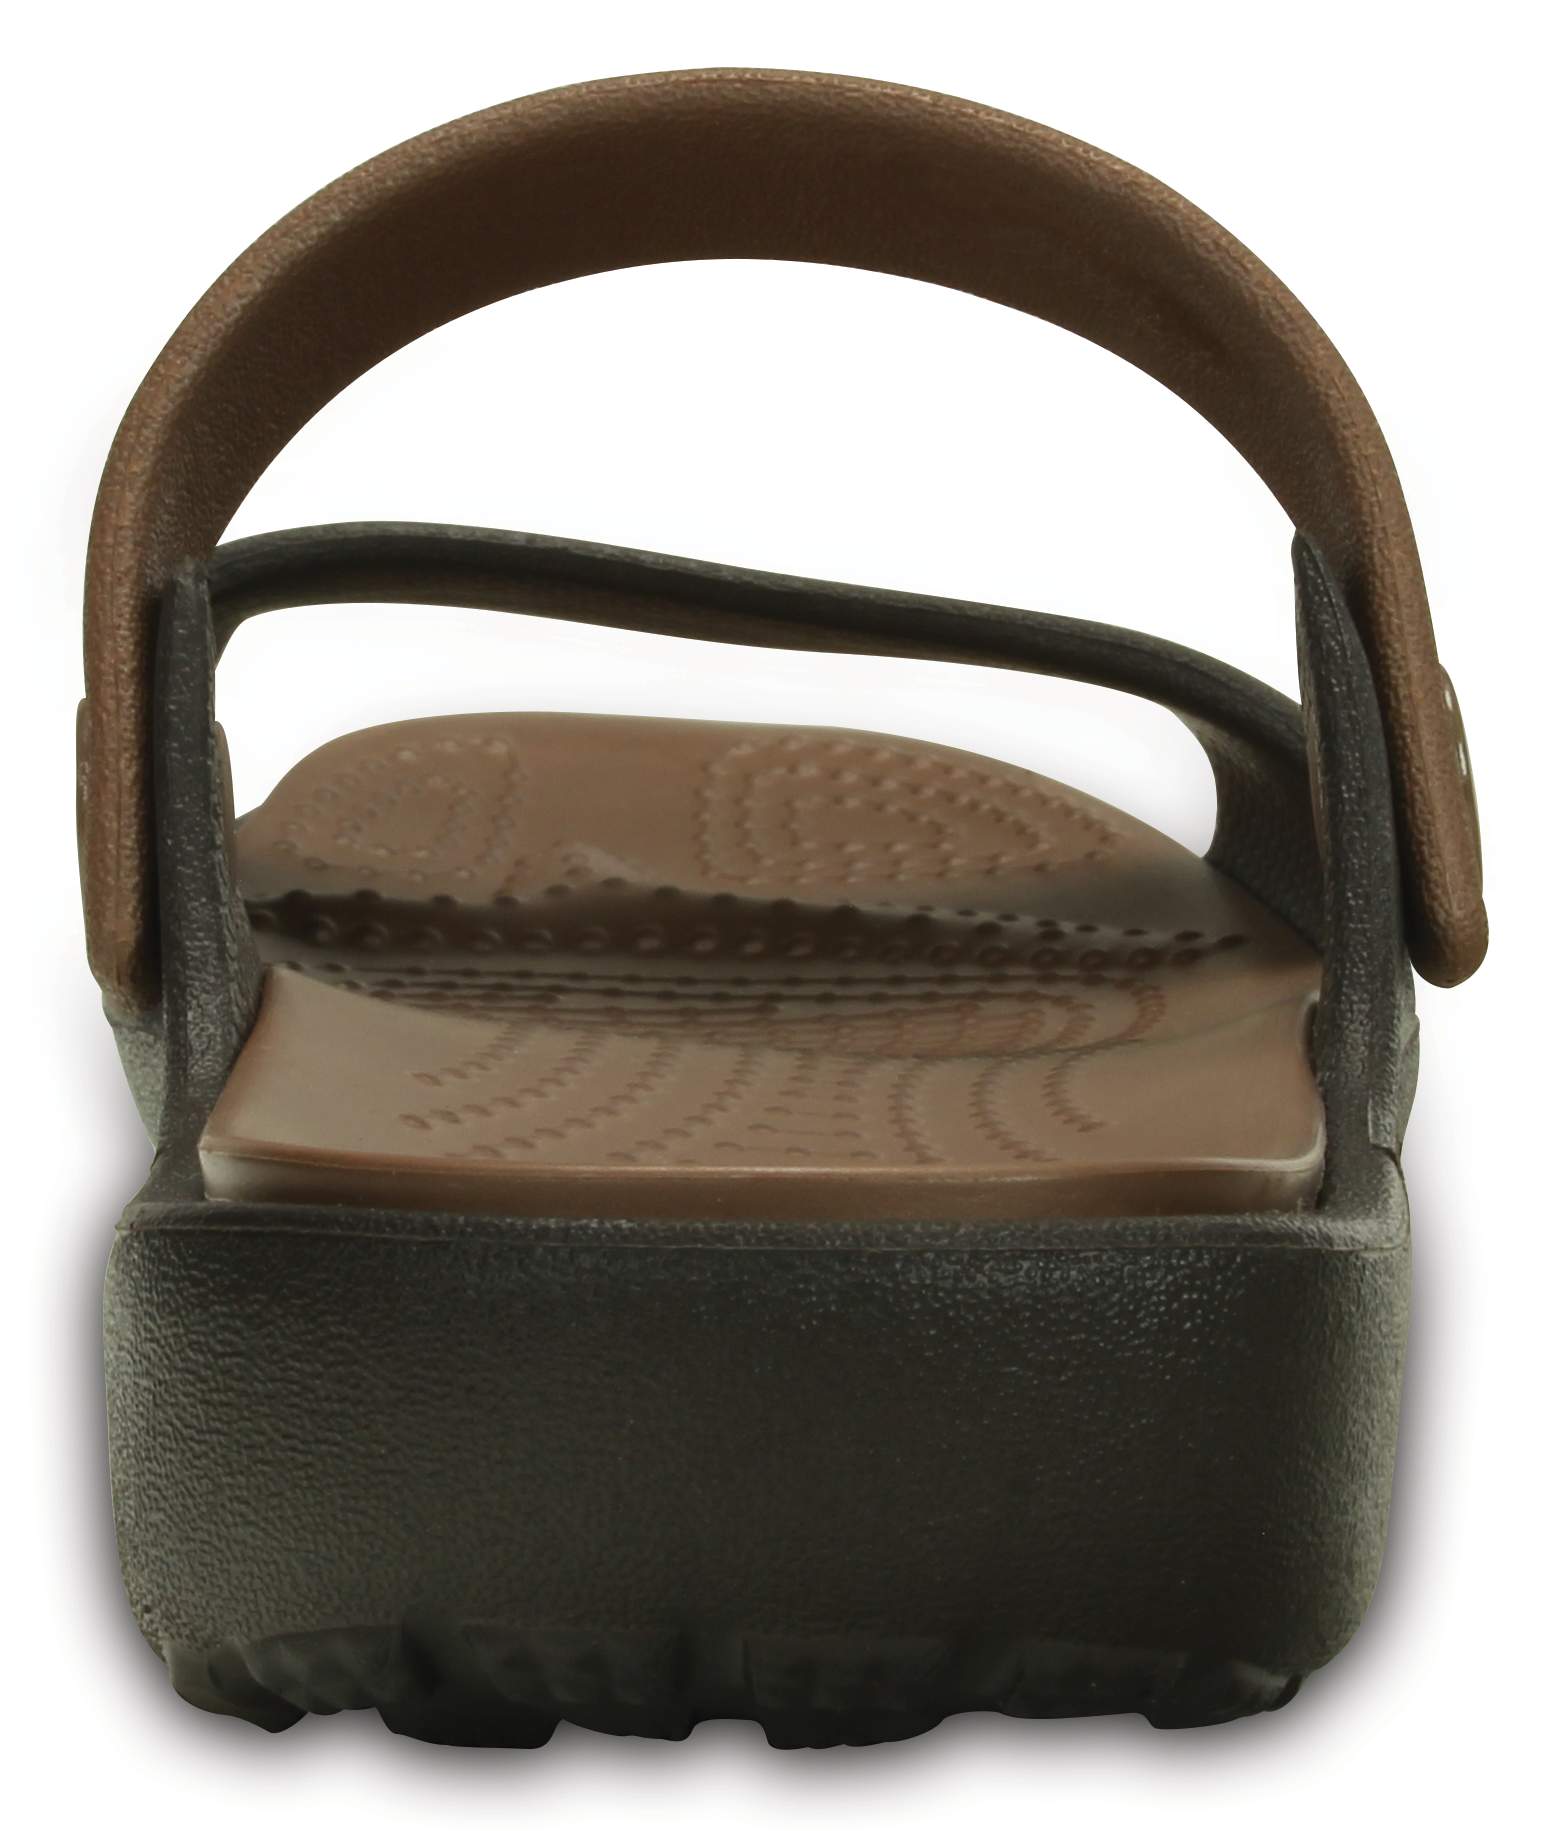 Crocs Womens Coretta Sandal | eBay